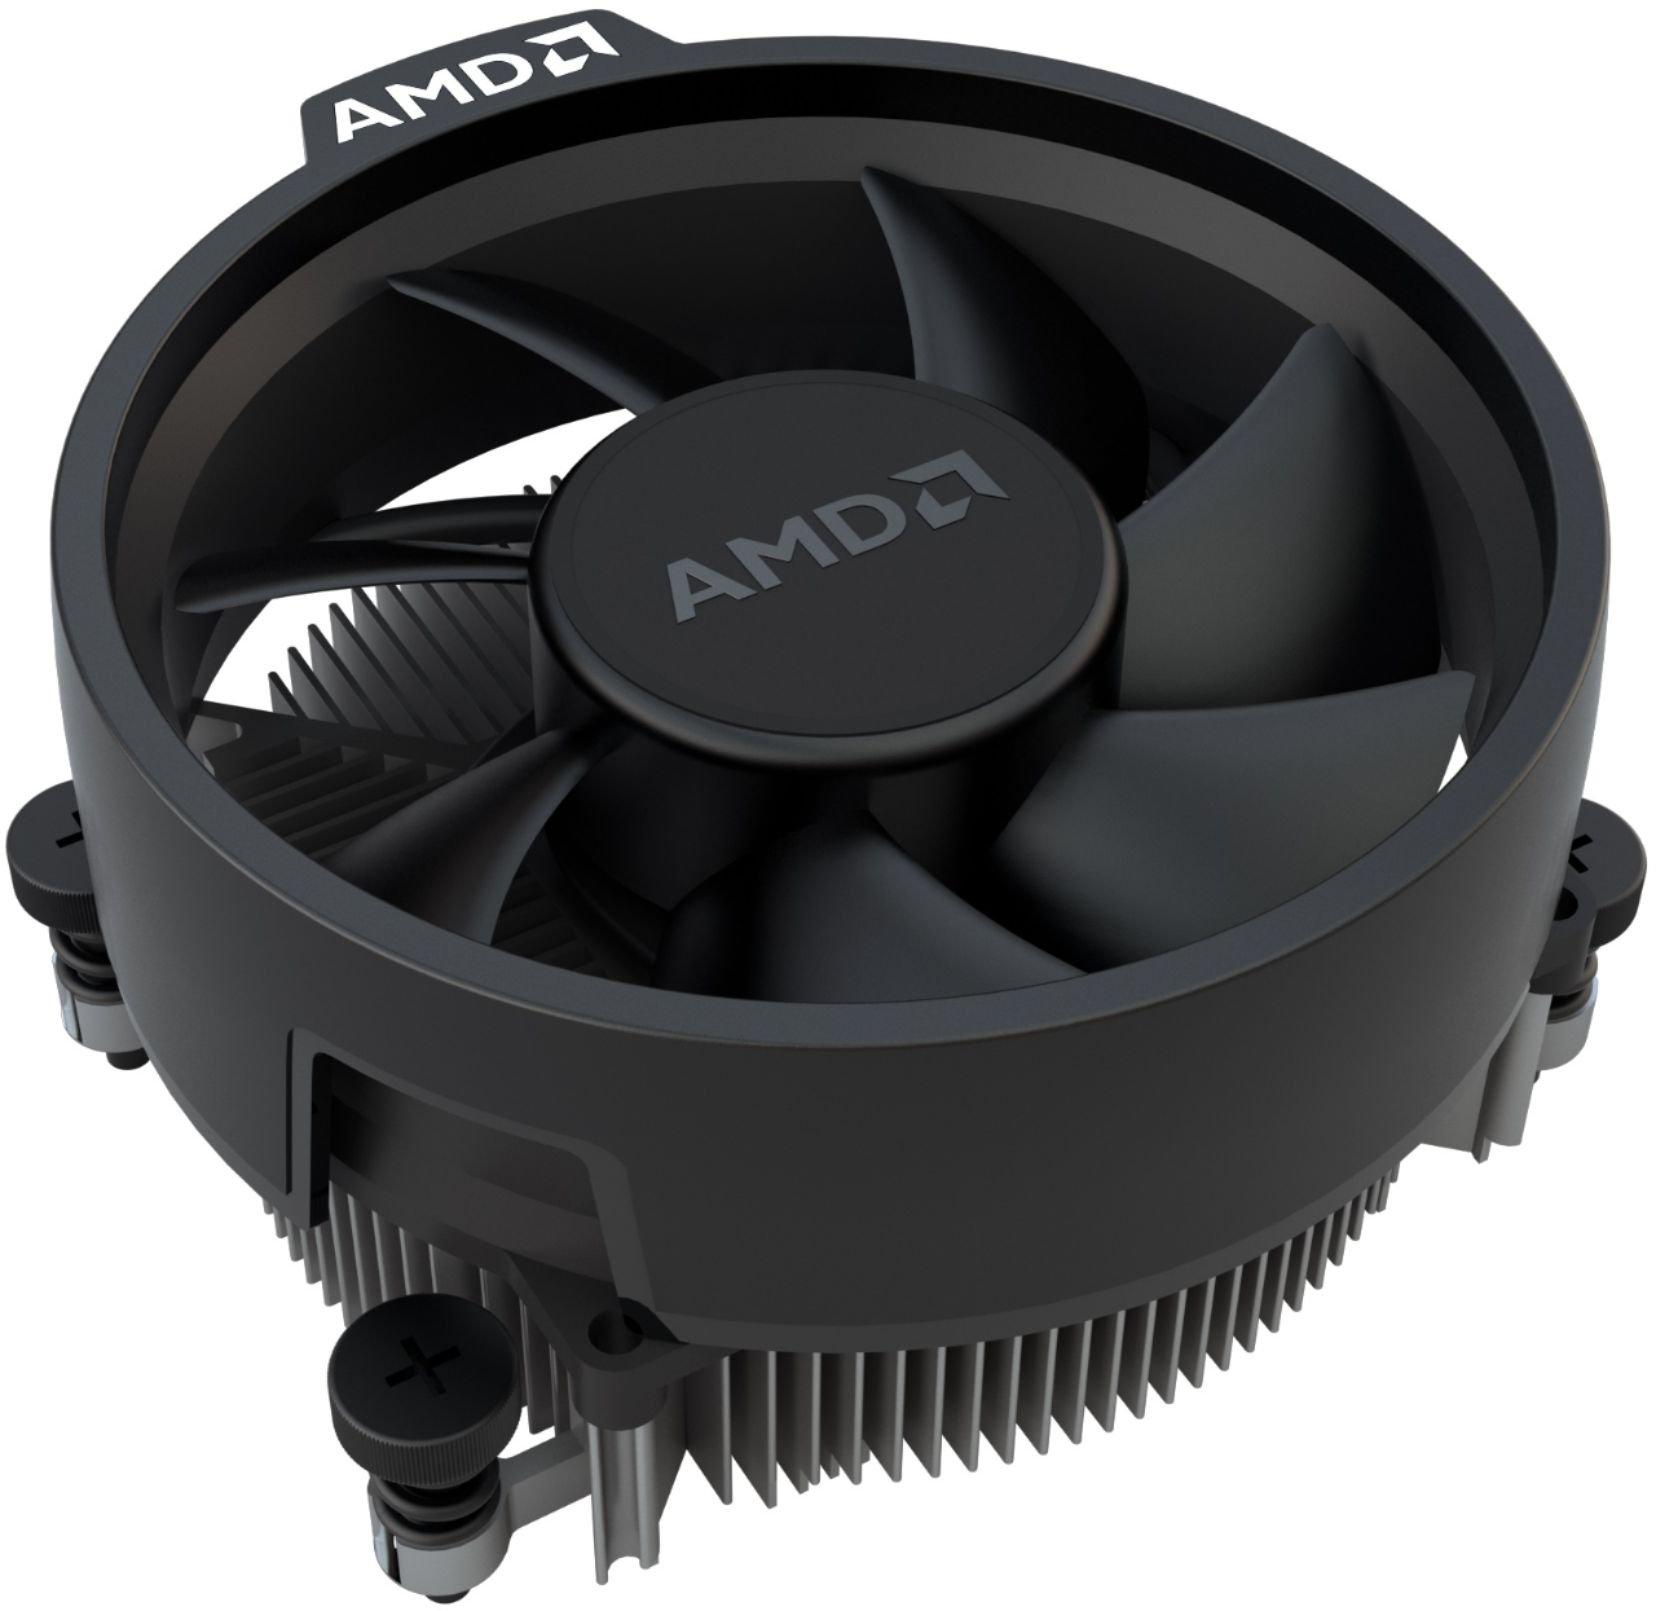 AMD Ryzen 5 5600X Processor 6-core 12 Threads up to 4.6 GHz